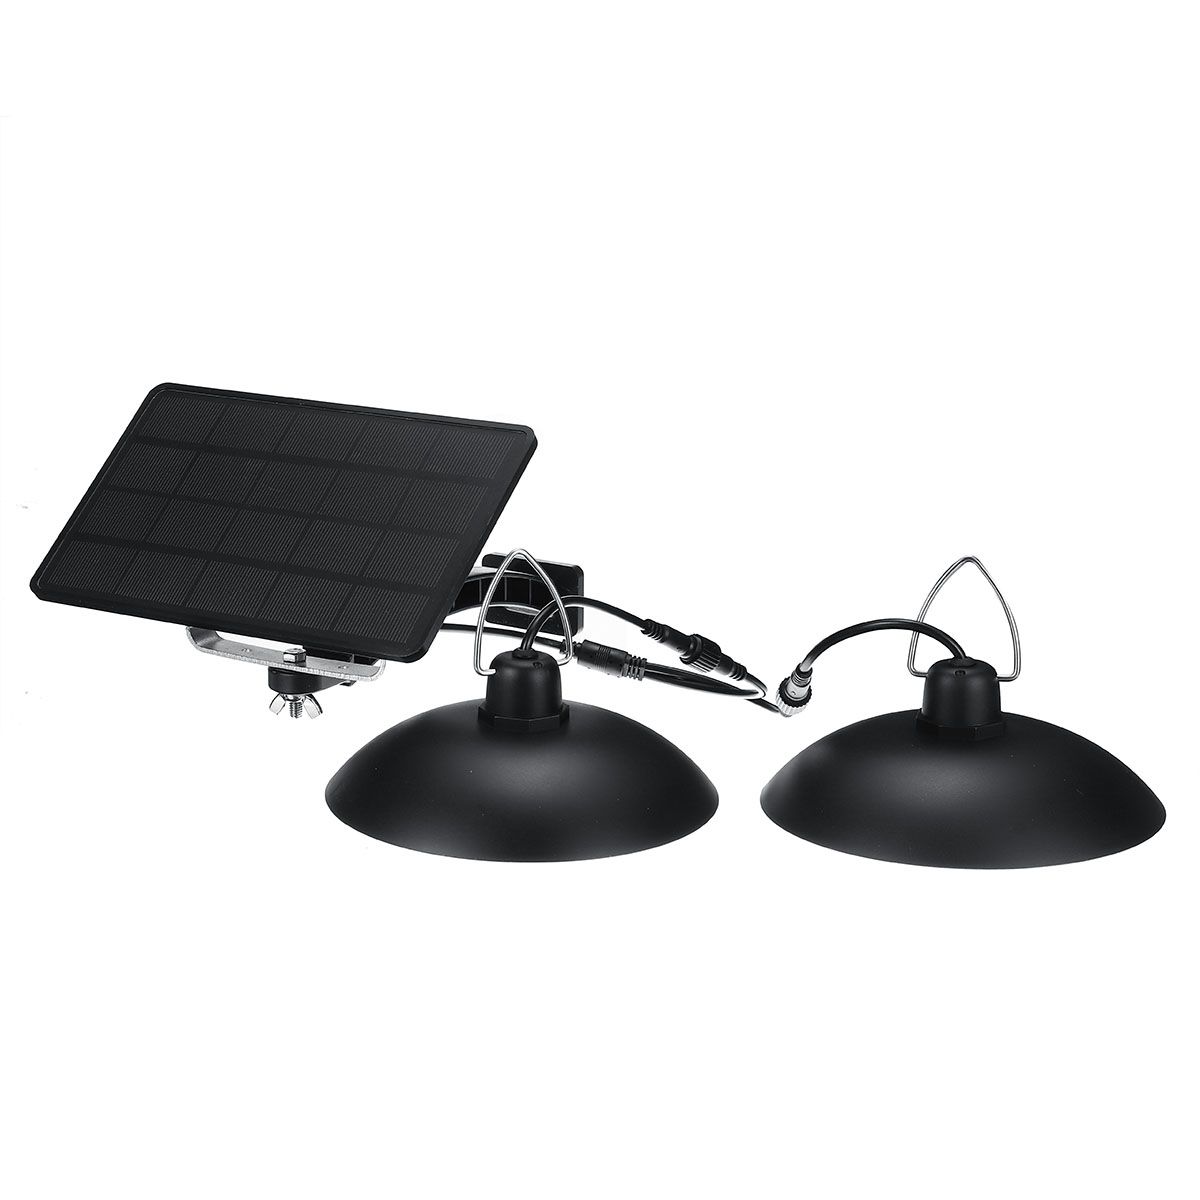 Double-Head-LED-Solar-Light-IP65-Waterproof-Outdoor-Garden-Pendant-Lamp-for-Home-Park-Street-Yard-1674745